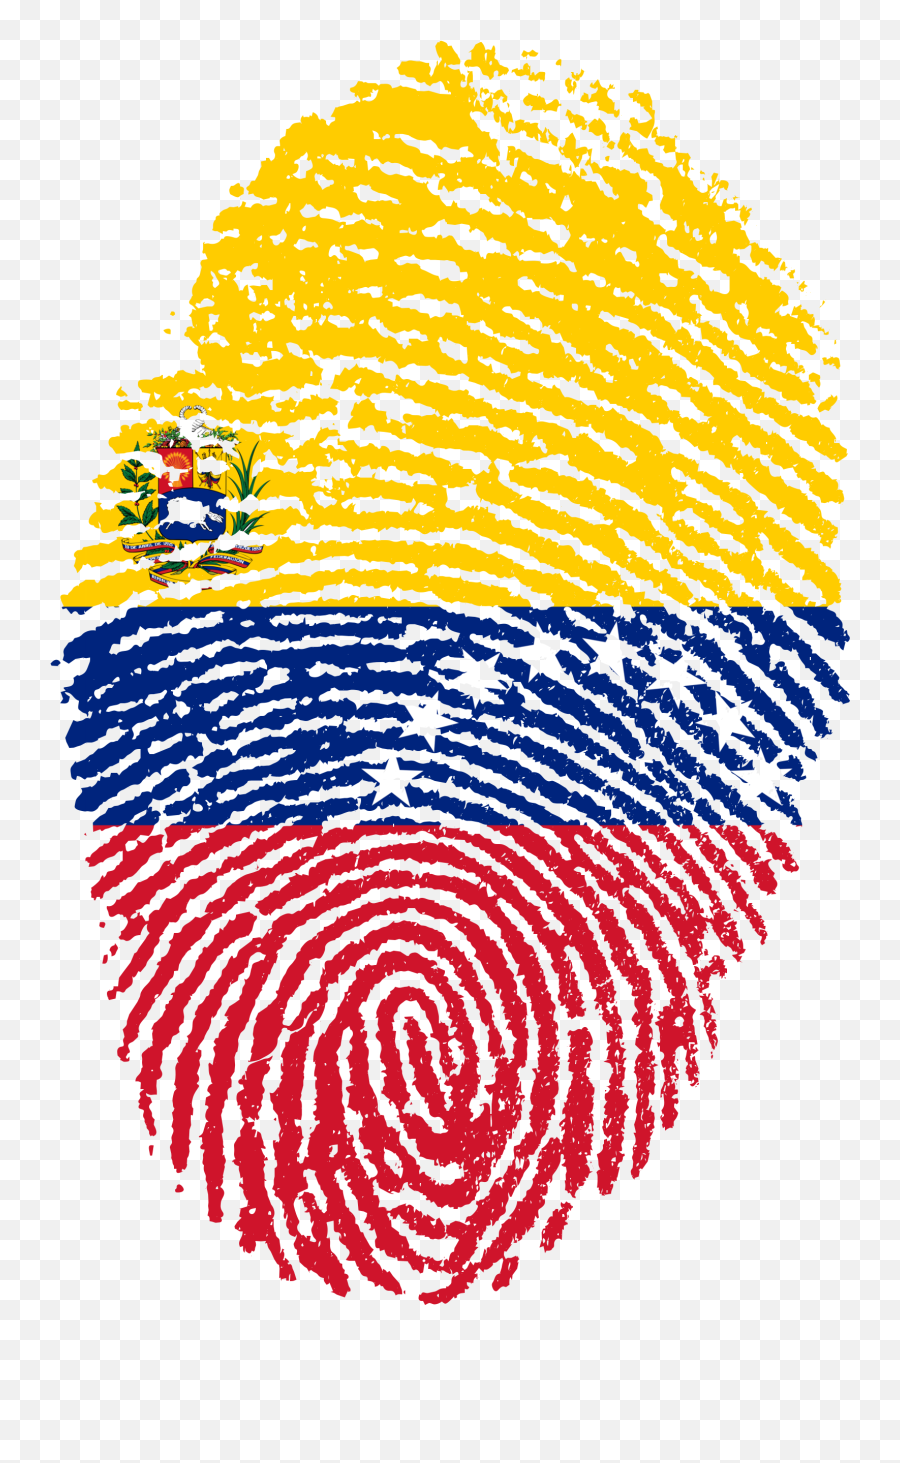 Snappygoat - Challenges Of Digital India Png,Venezuela Flag Png